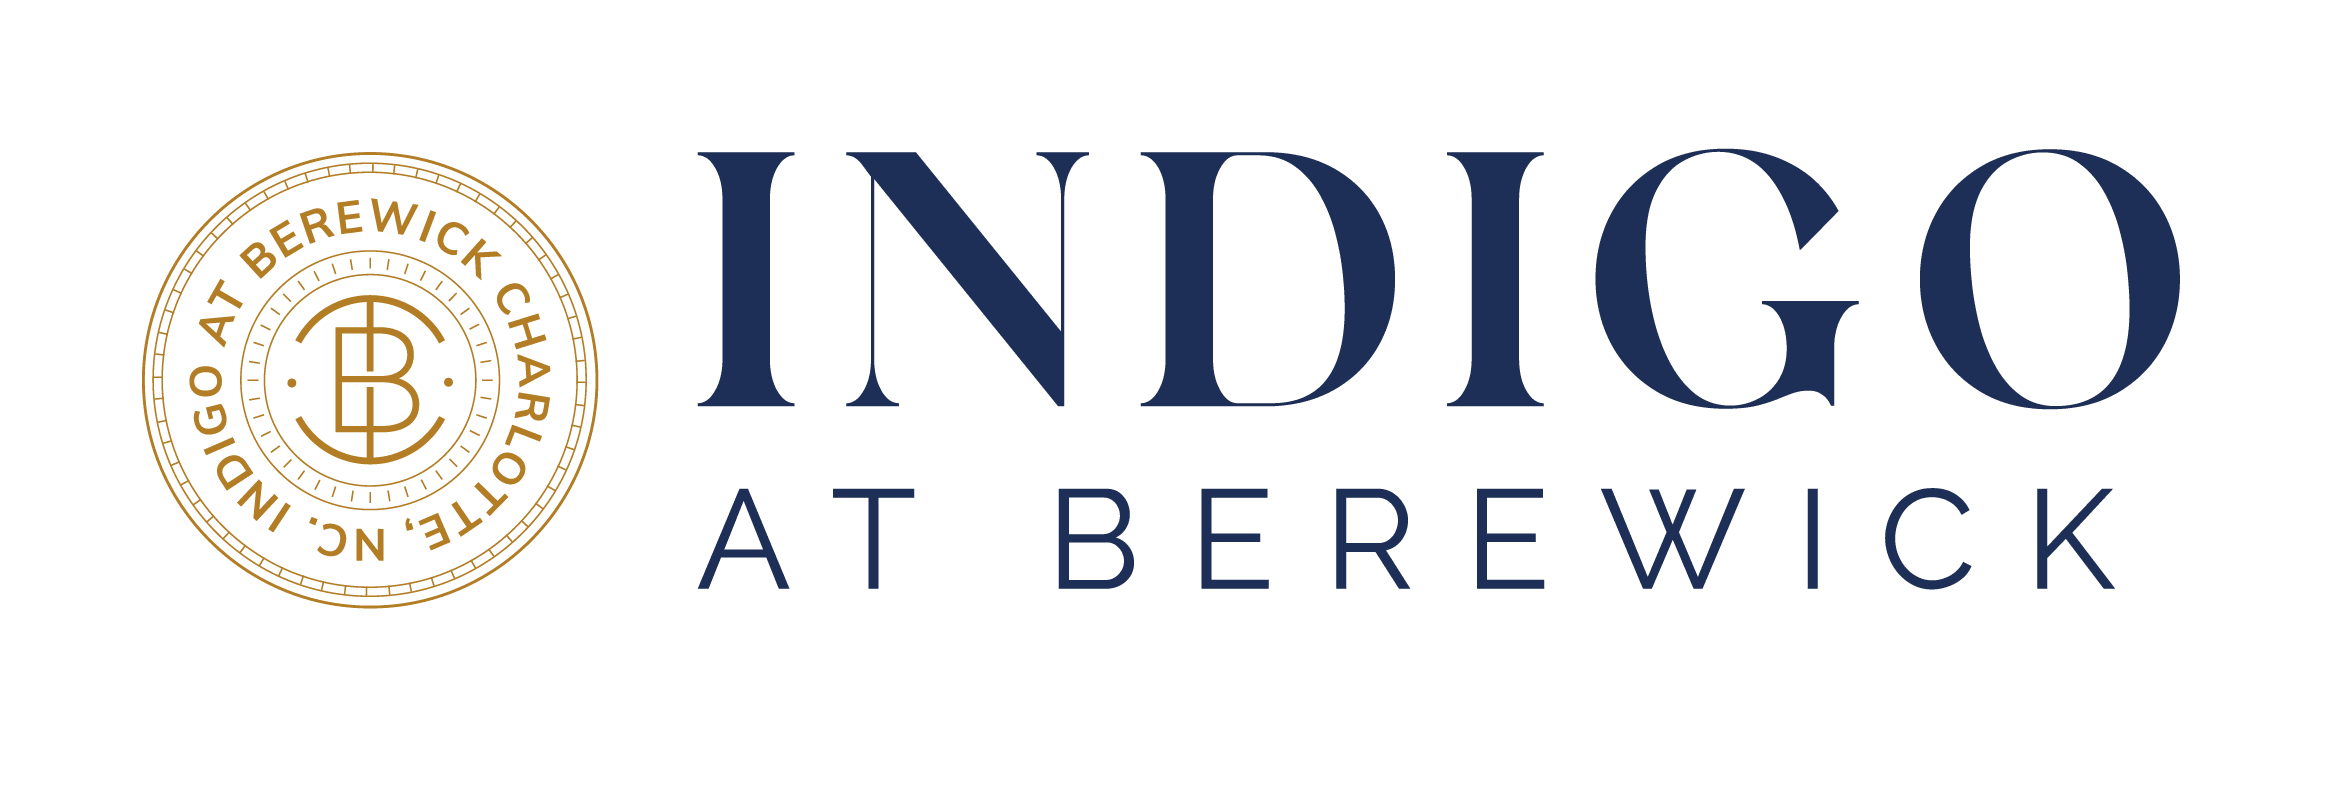 the logo for indigo at brewery